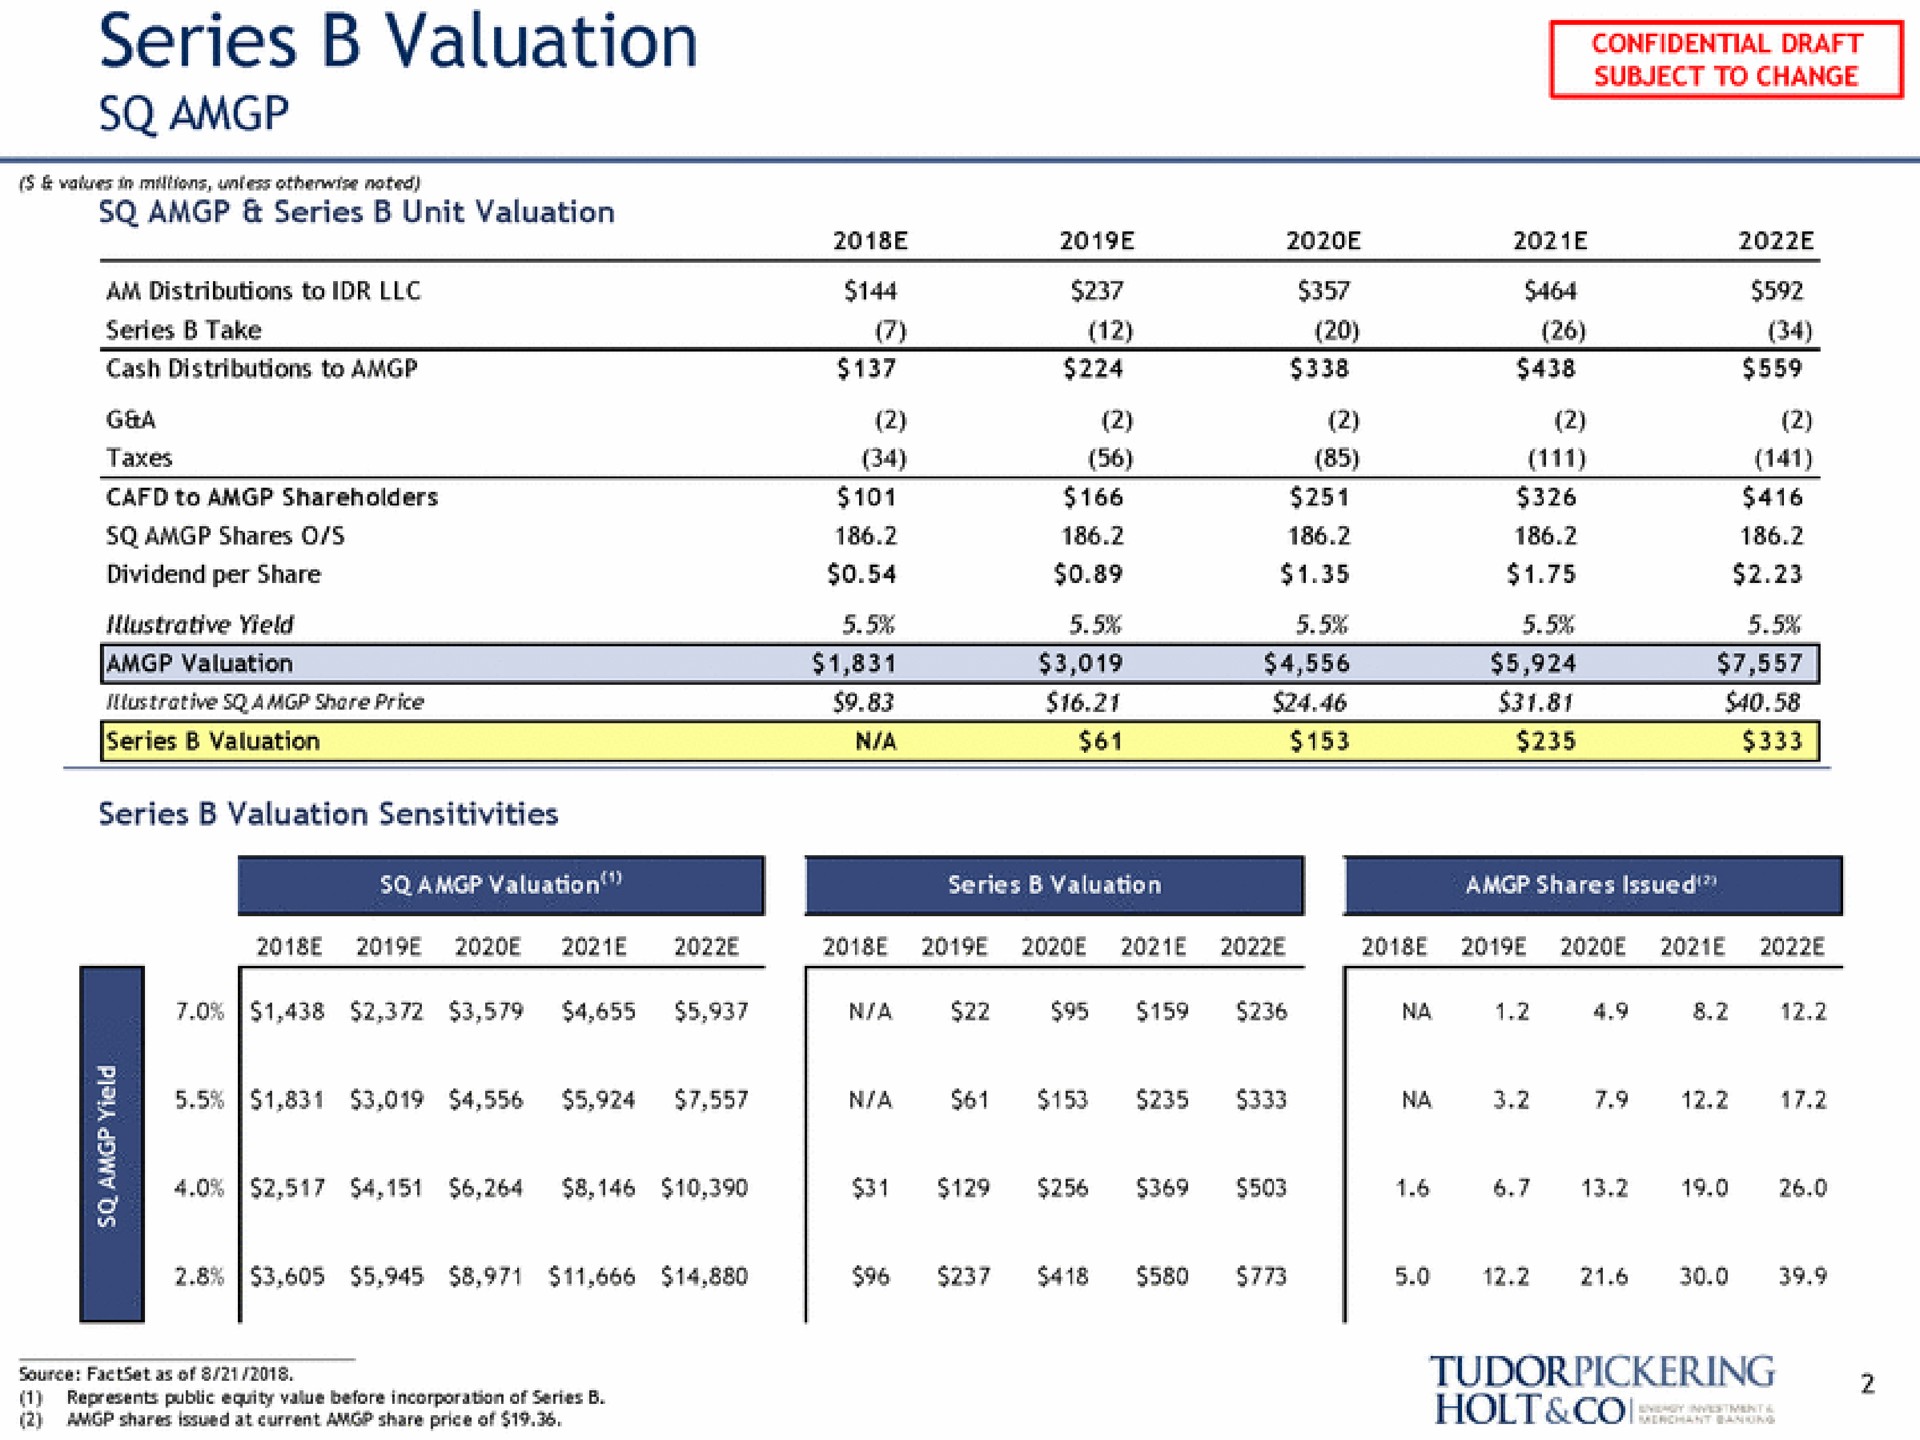 series valuation | Tudor, Pickering, Holt & Co